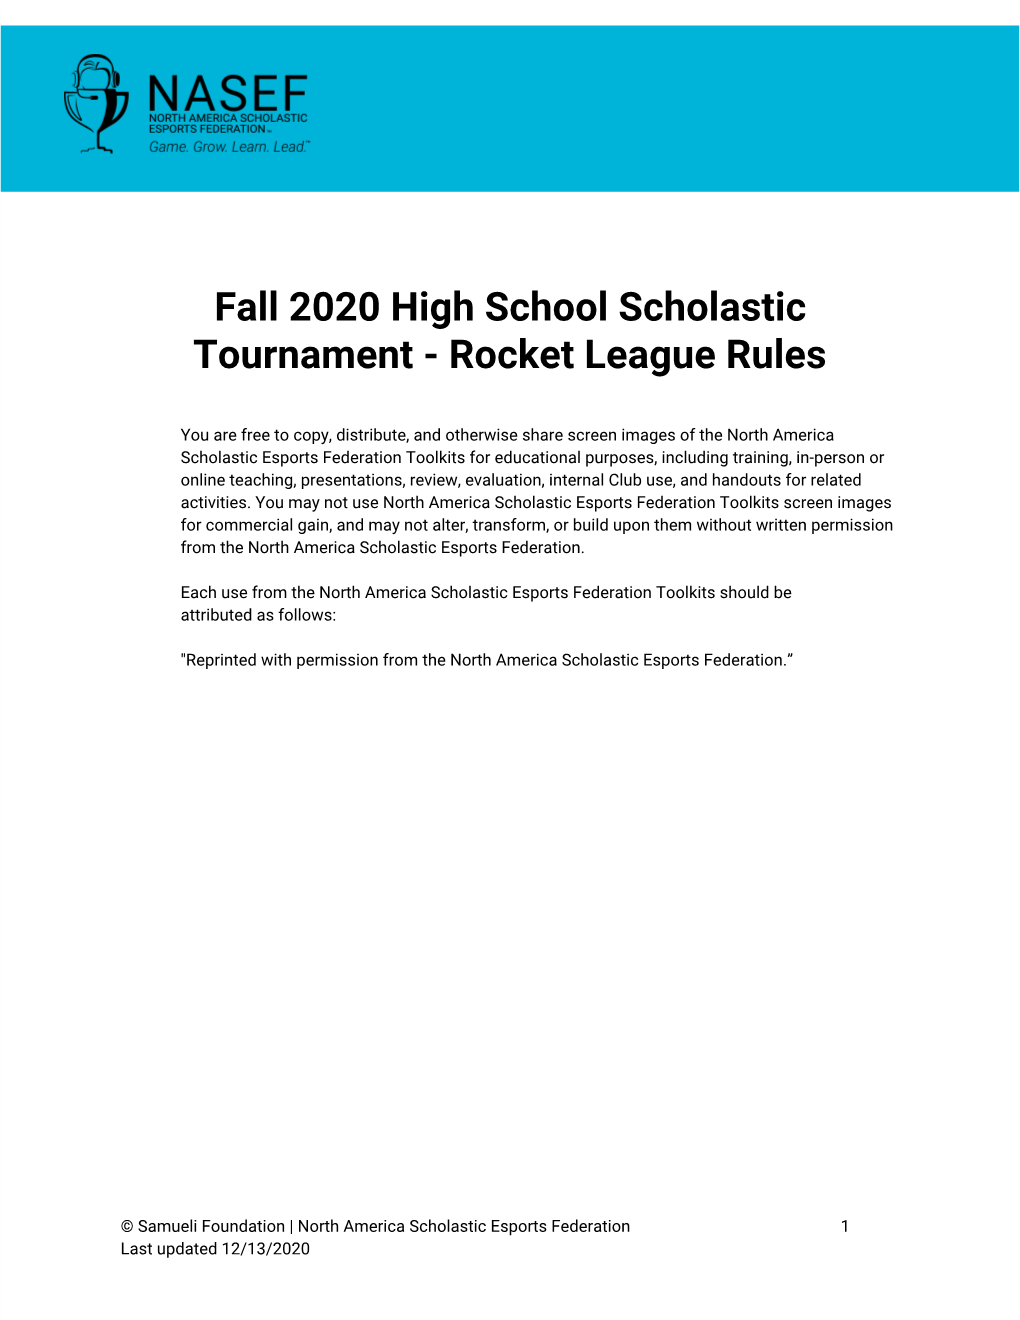 Fall 2020 High School Scholastic Tournament - Rocket League Rules